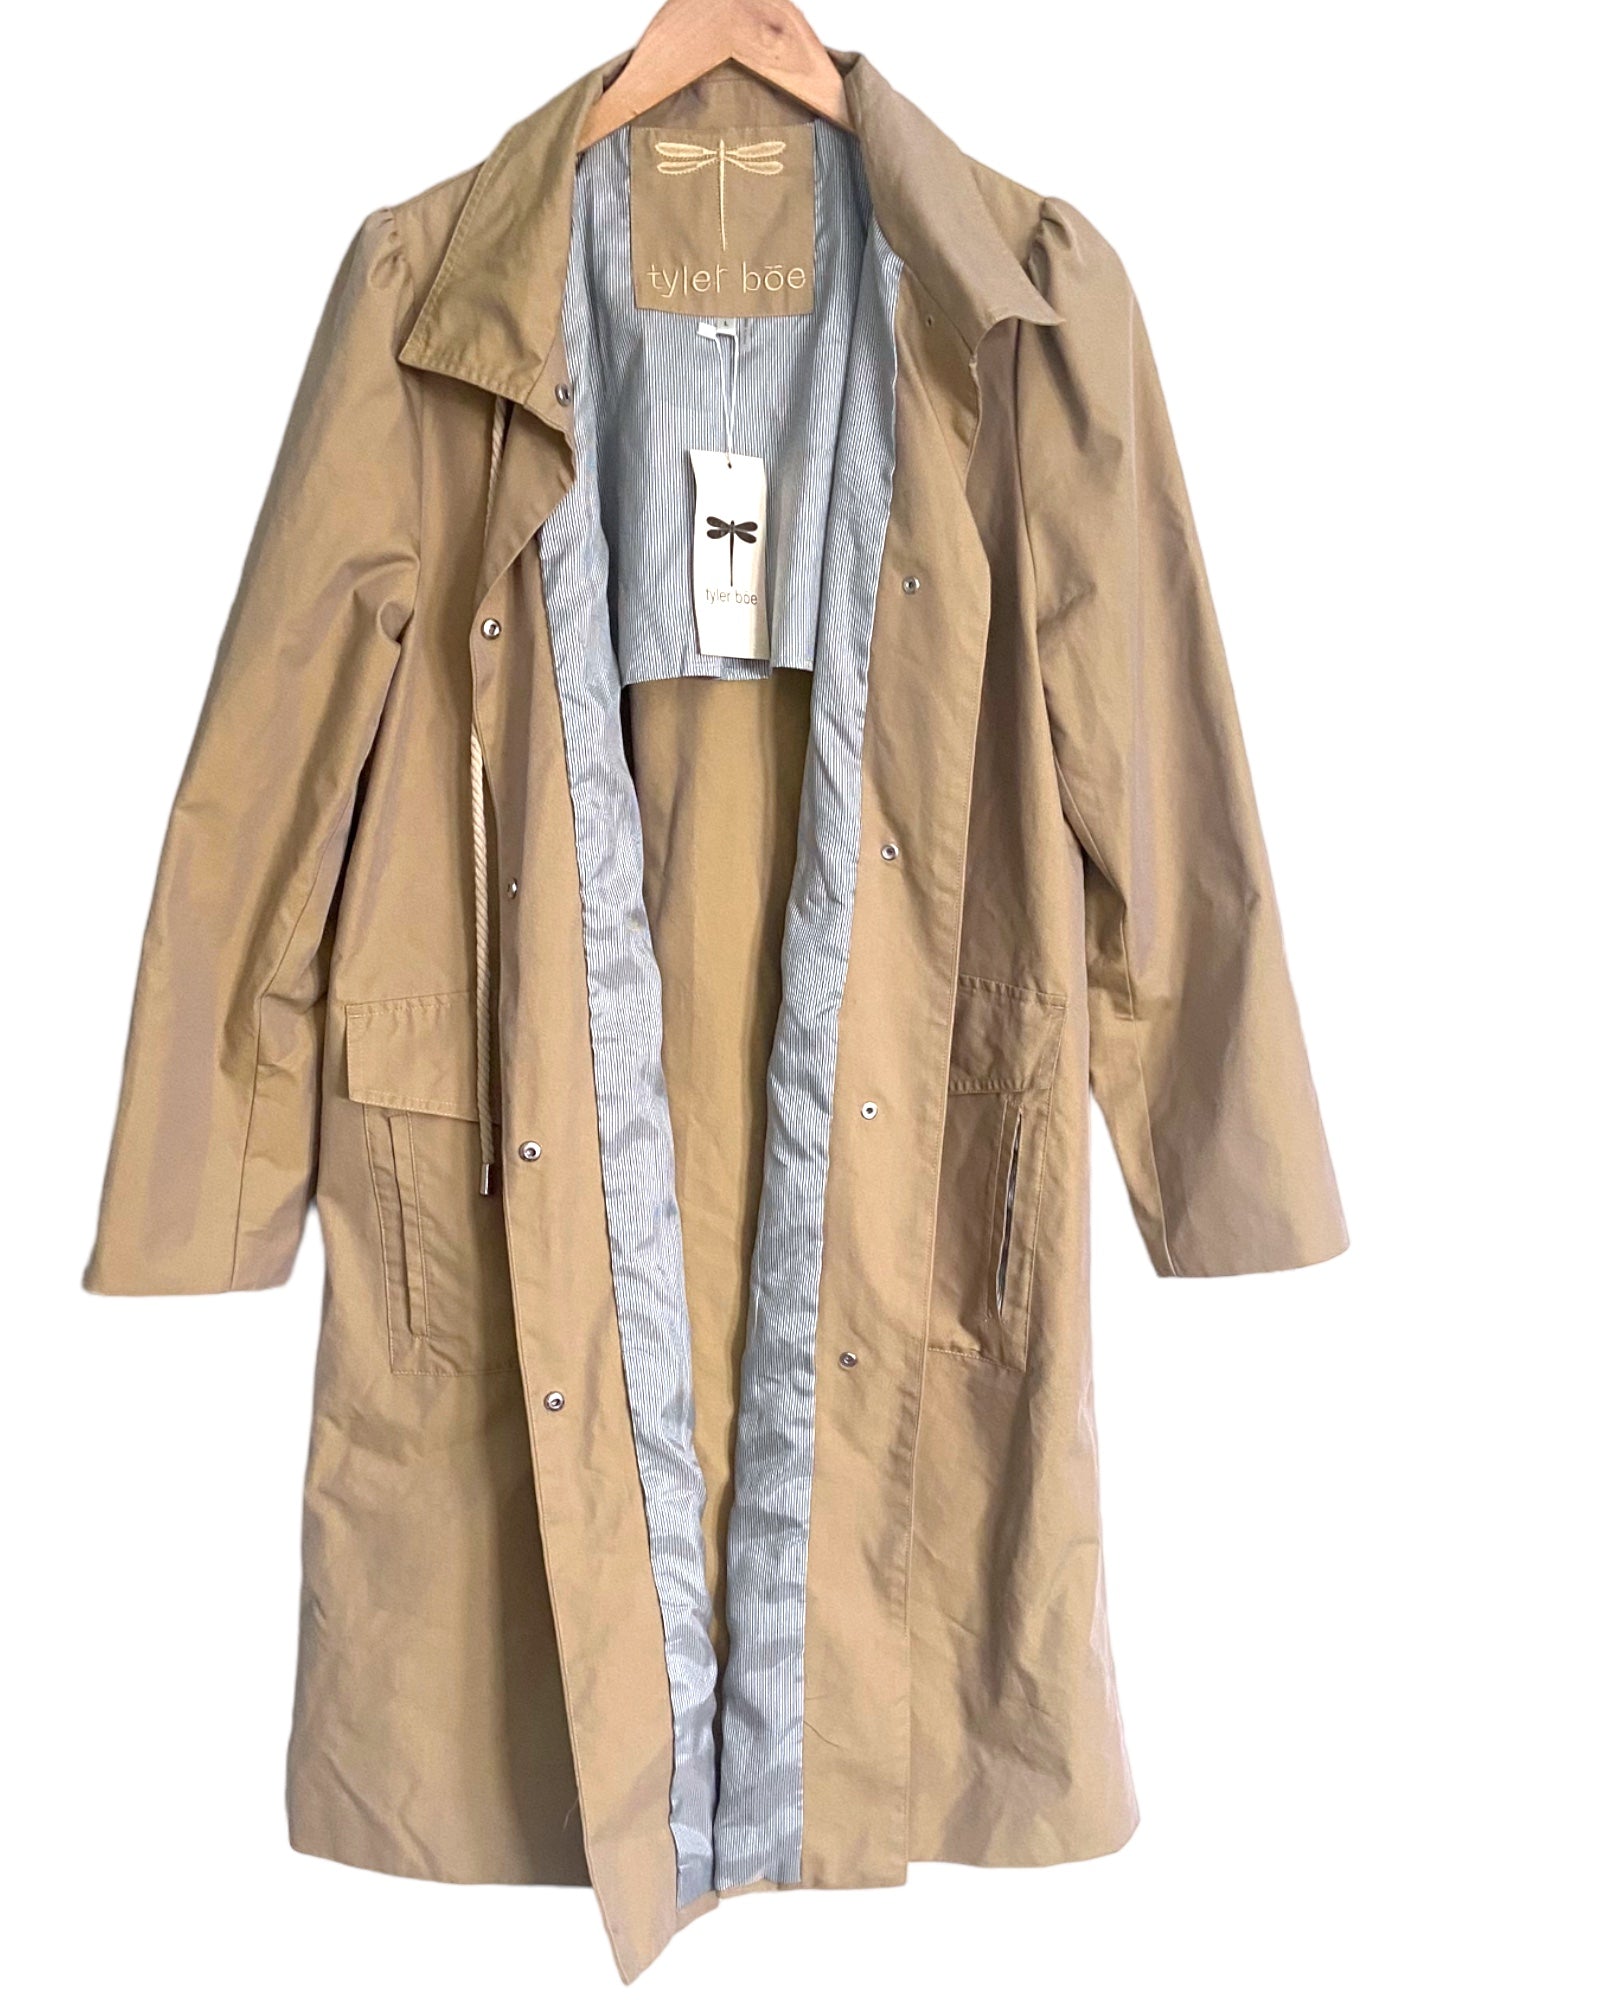 Warm Spring TYLER BOE British tan raincoat jacket